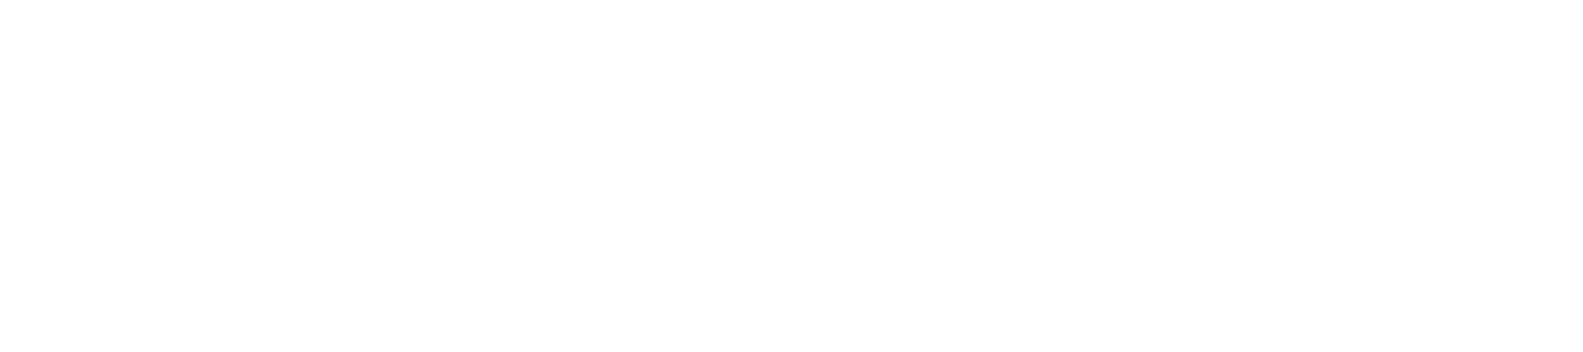 American Vanguard logo grand pour les fonds sombres (PNG transparent)